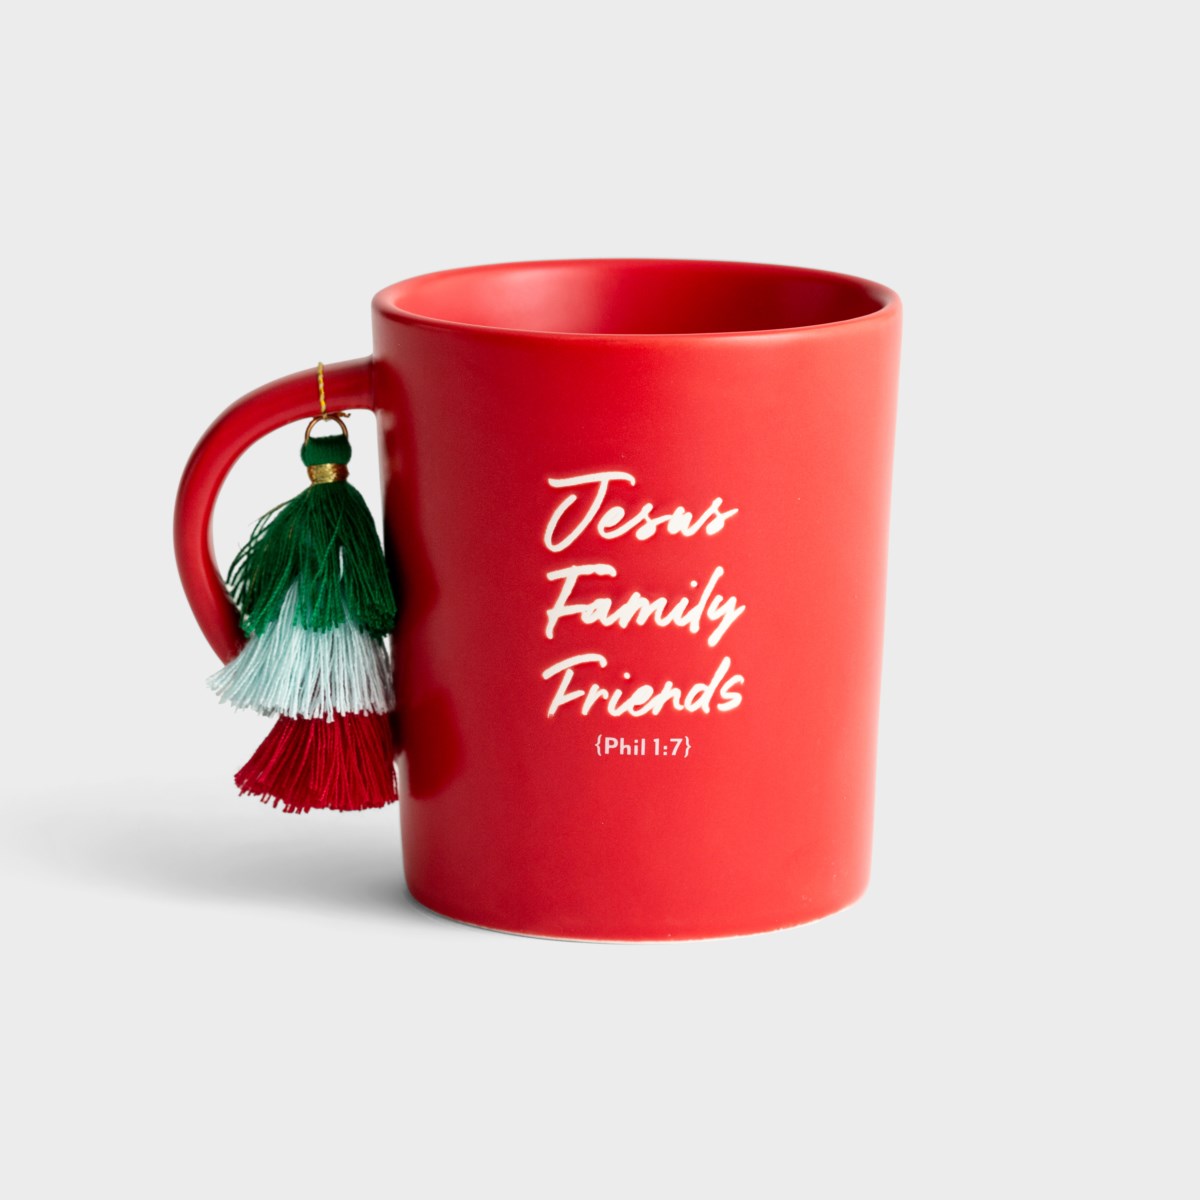 Jesus Family Friends - Ceramic Mug